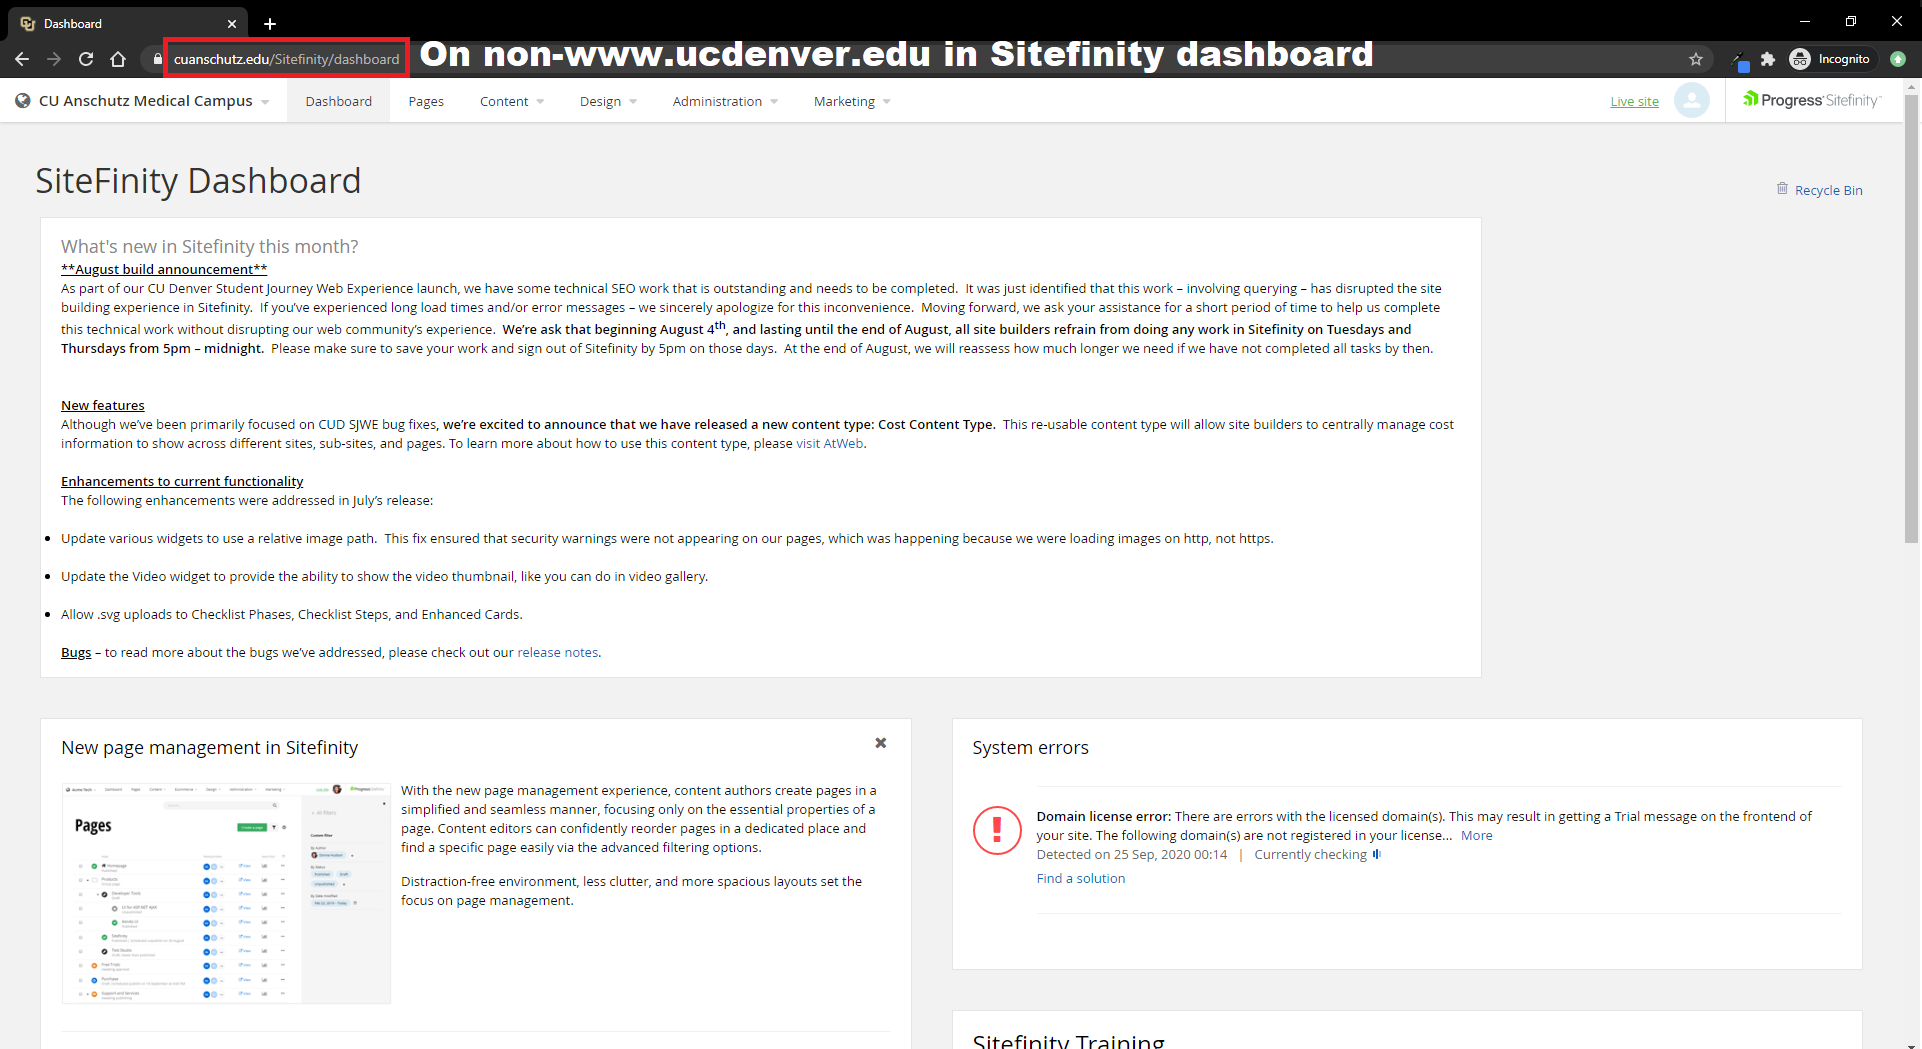 Sitefinity dashboard on non-www.ucdenver.edu domain